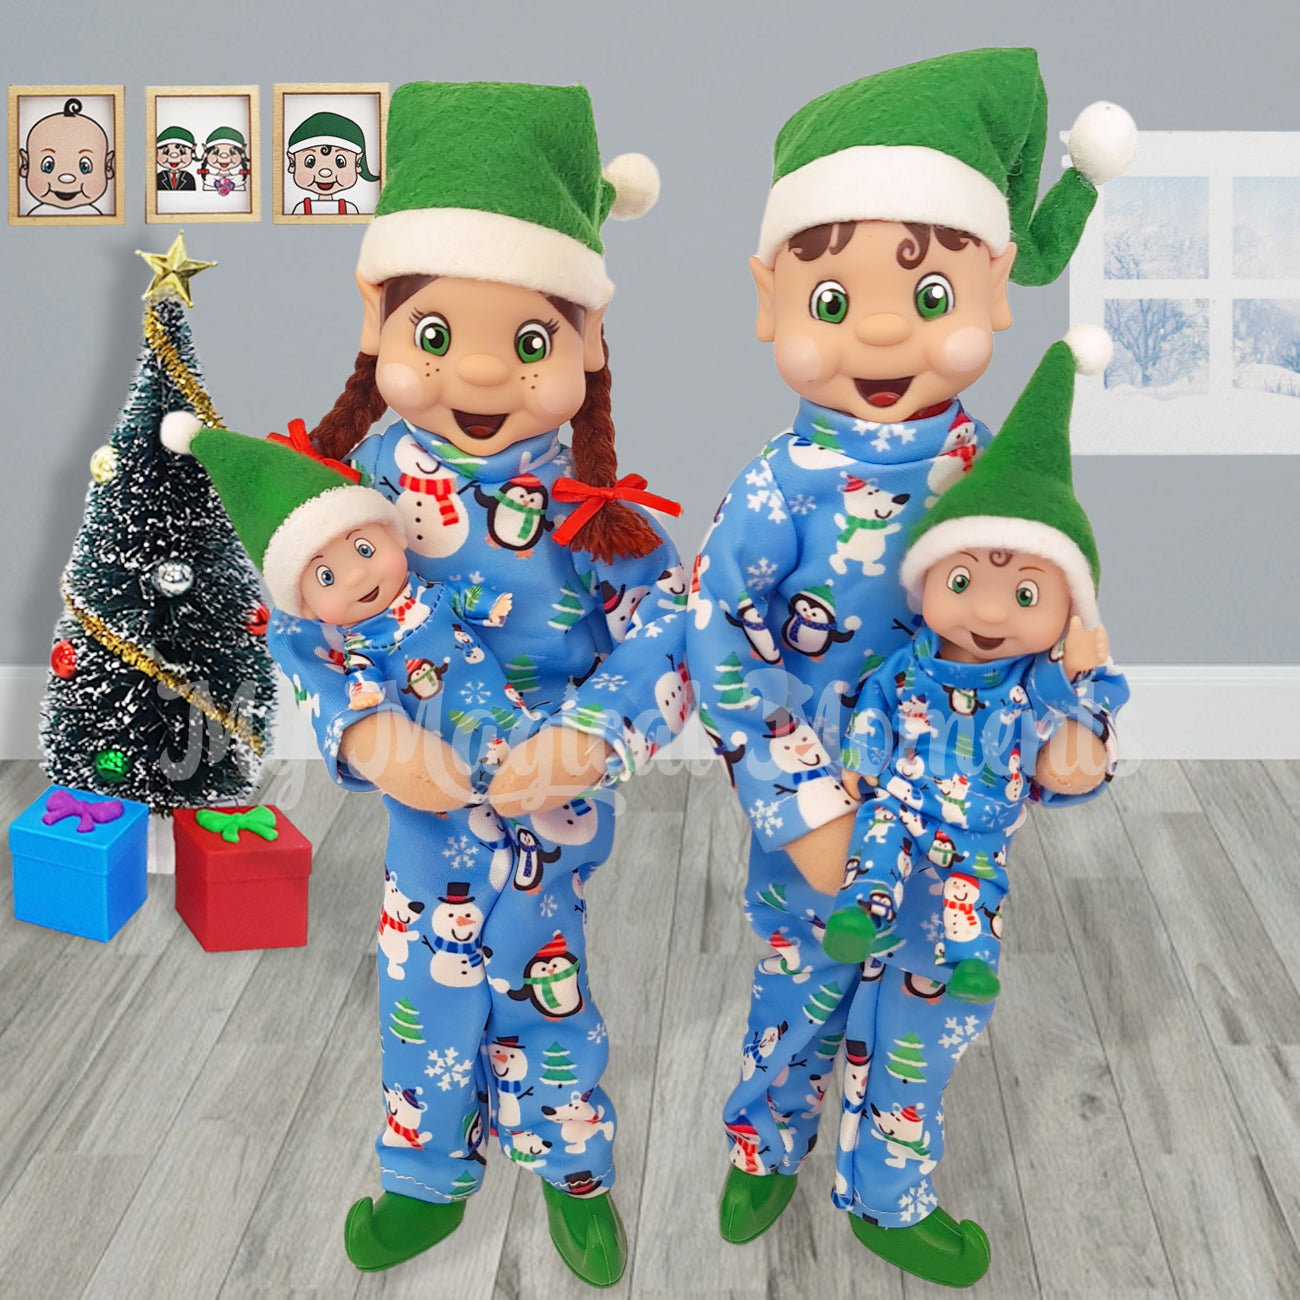 Elf family photo wearing matching Pyjamas